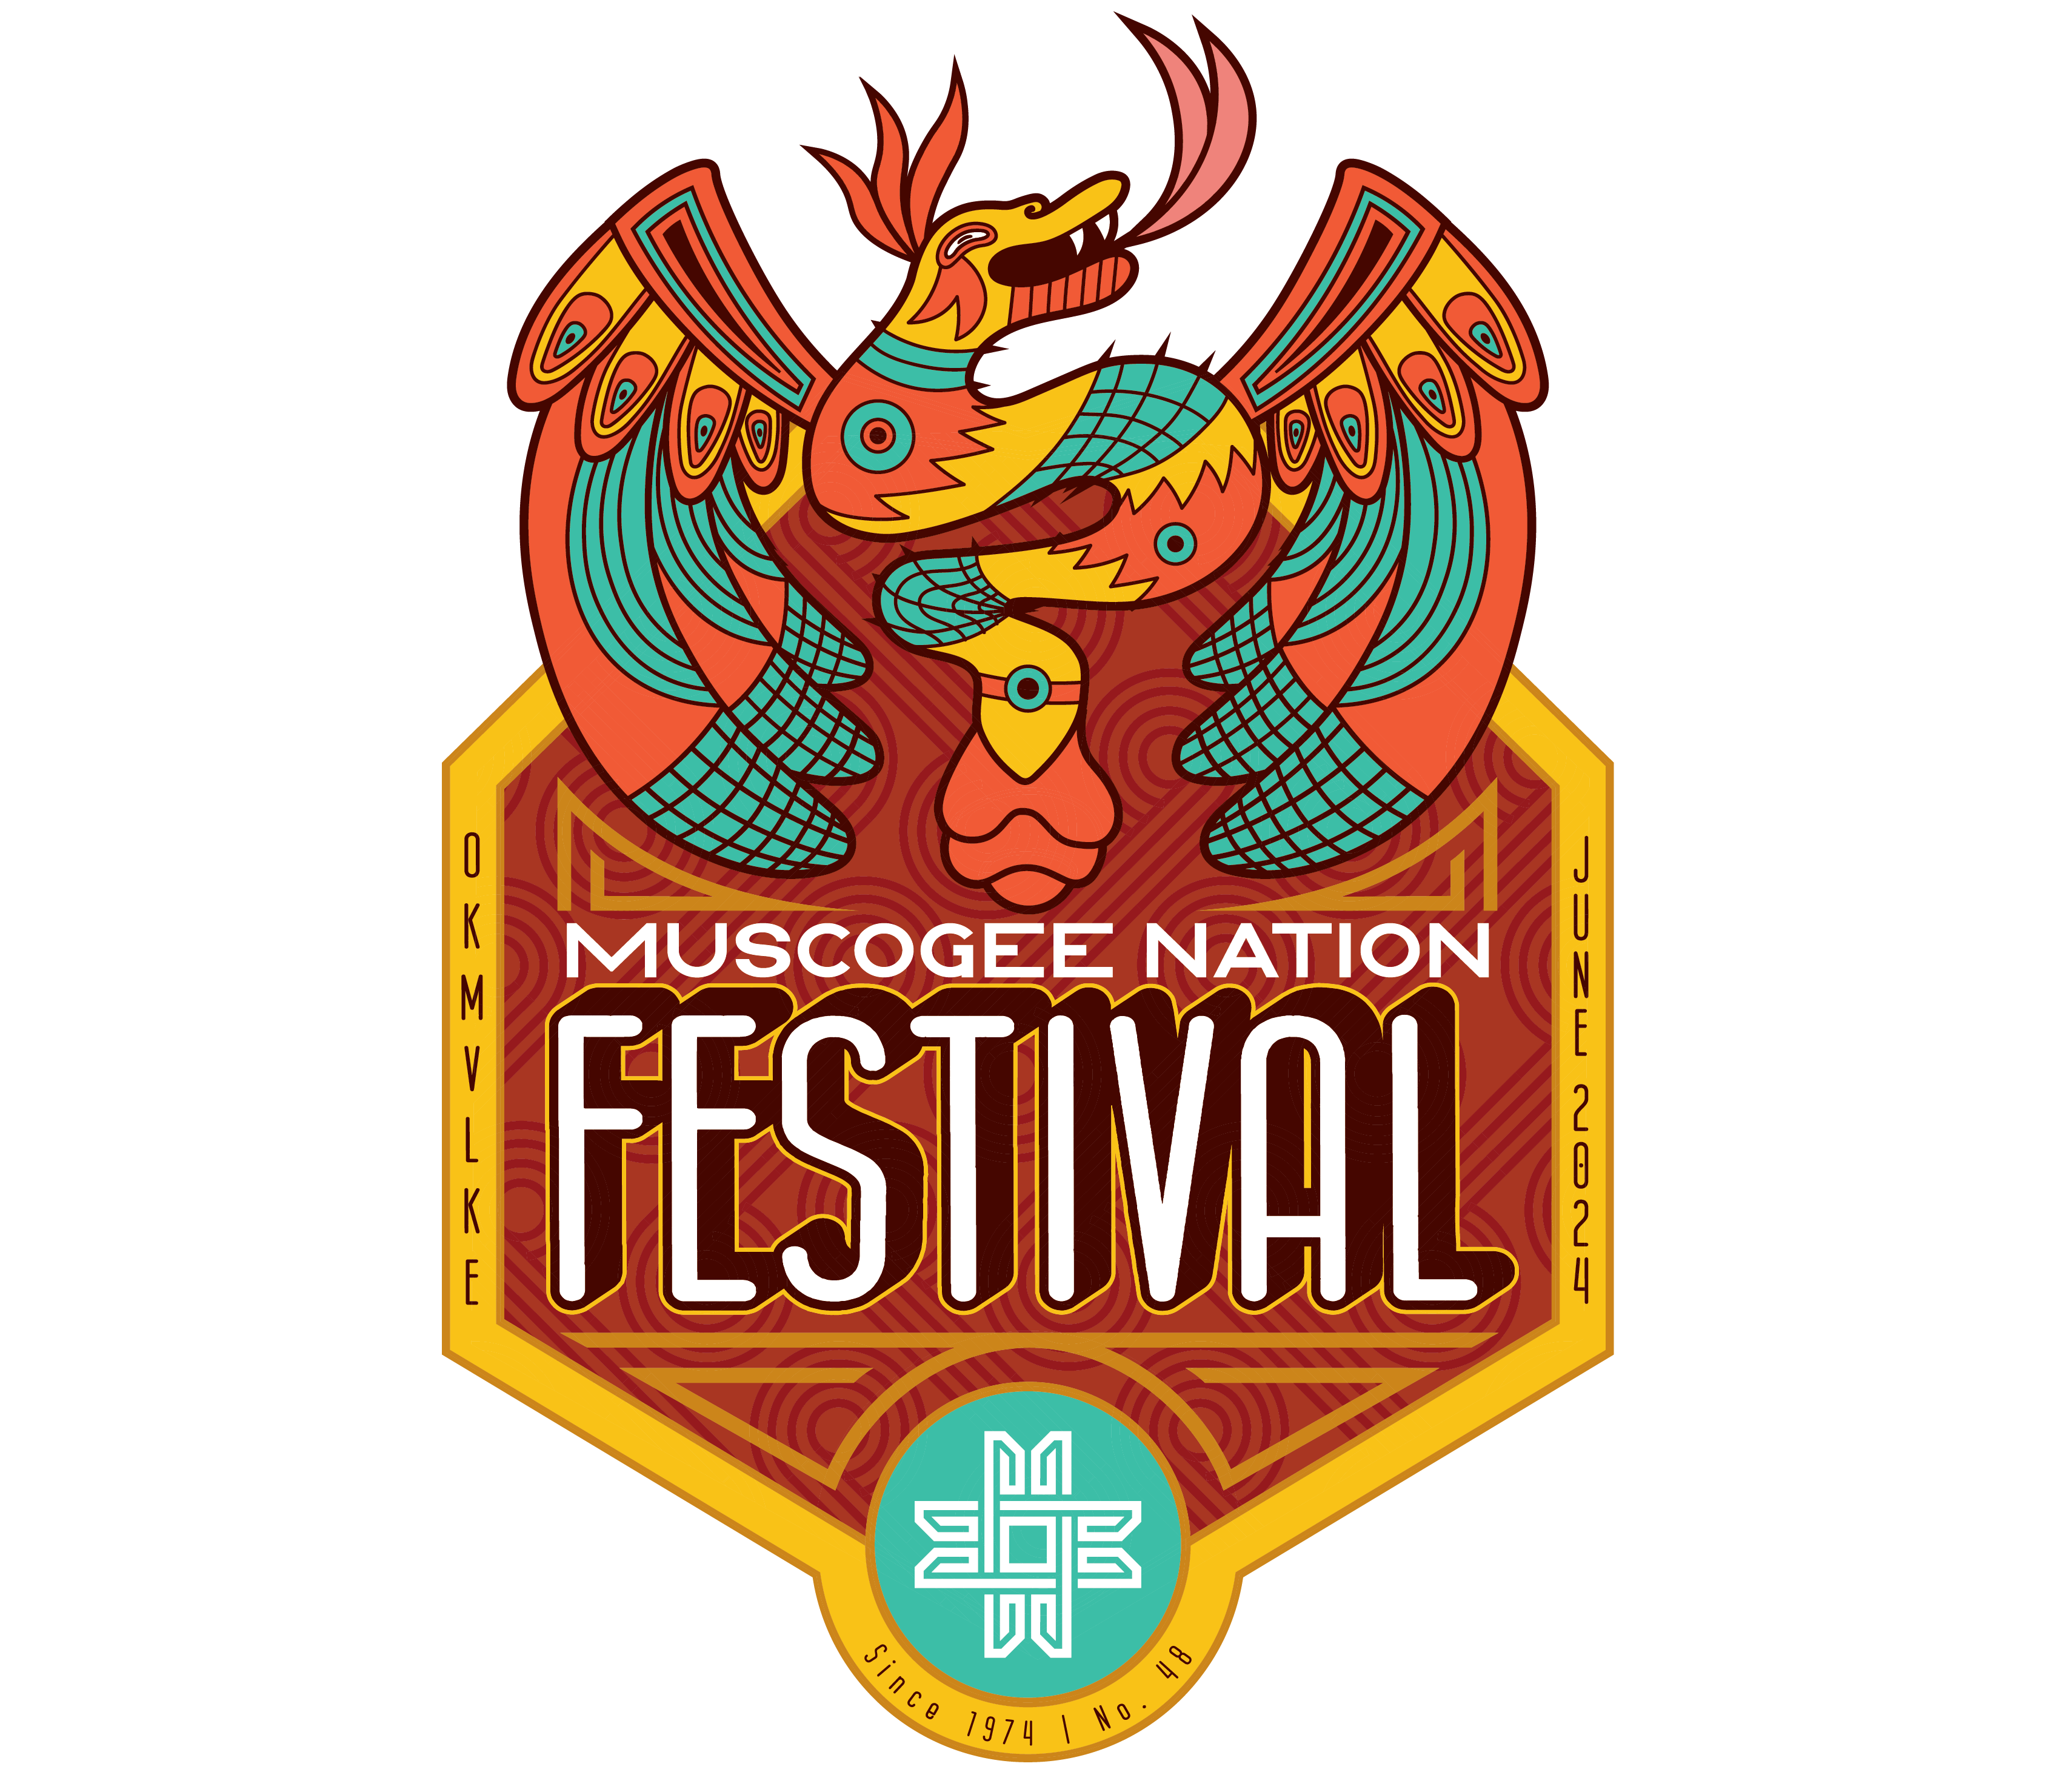 Muscogee Nation Festival